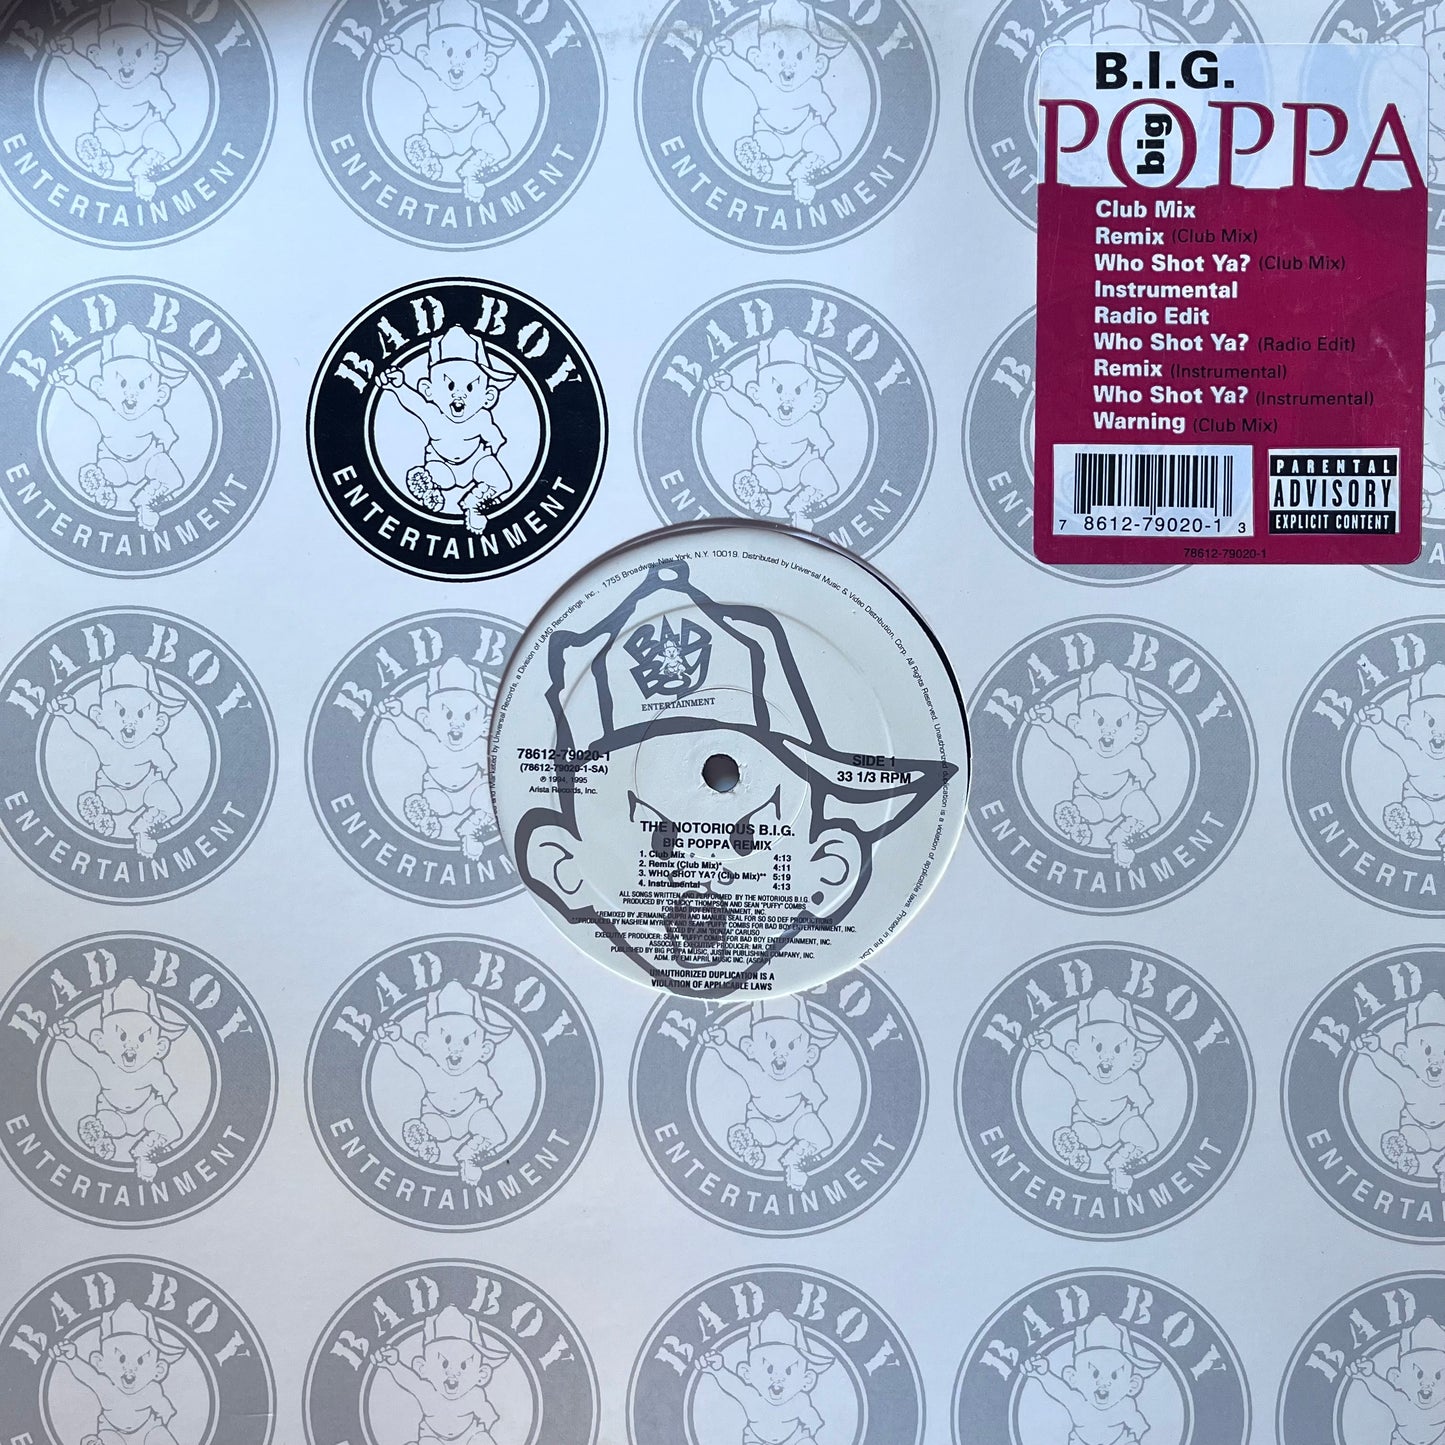 The Notorious B.I.G. “Big Poppa” / “Warning” 9 Version 12inch Vinyl on Bad Boy Entertainment